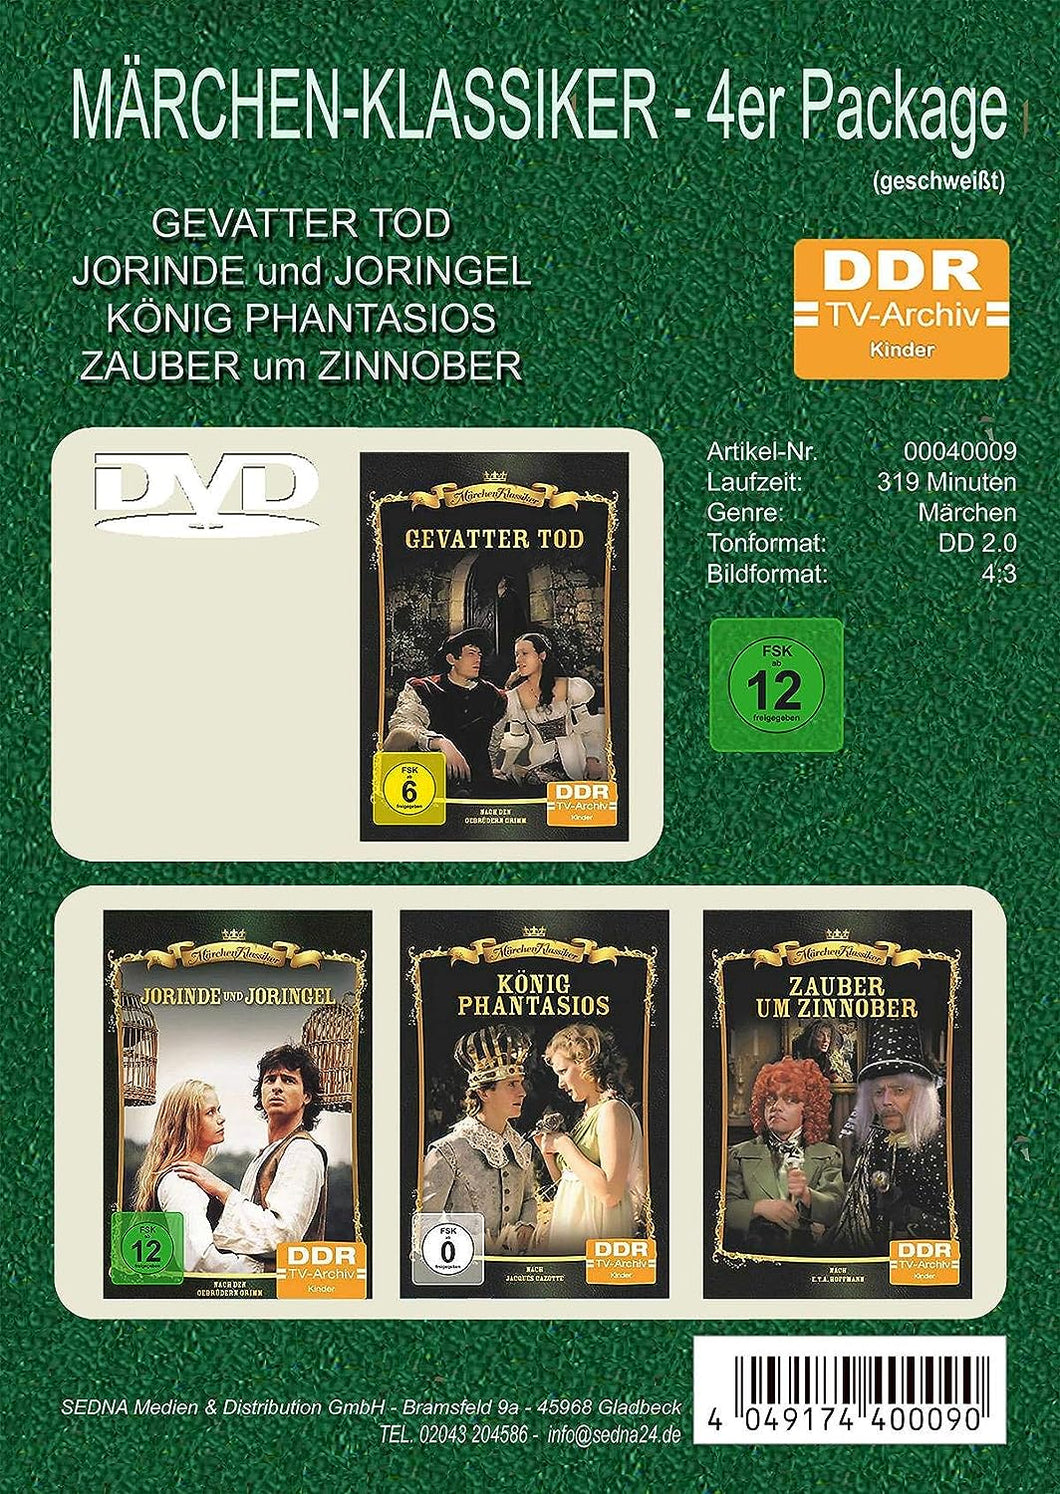 Märchen-Klassiker 4er Package - DDR-TV-Archiv - Gevatter Tod - Jorinde und Joringel - König Phantasios - Zauber um Zinnober